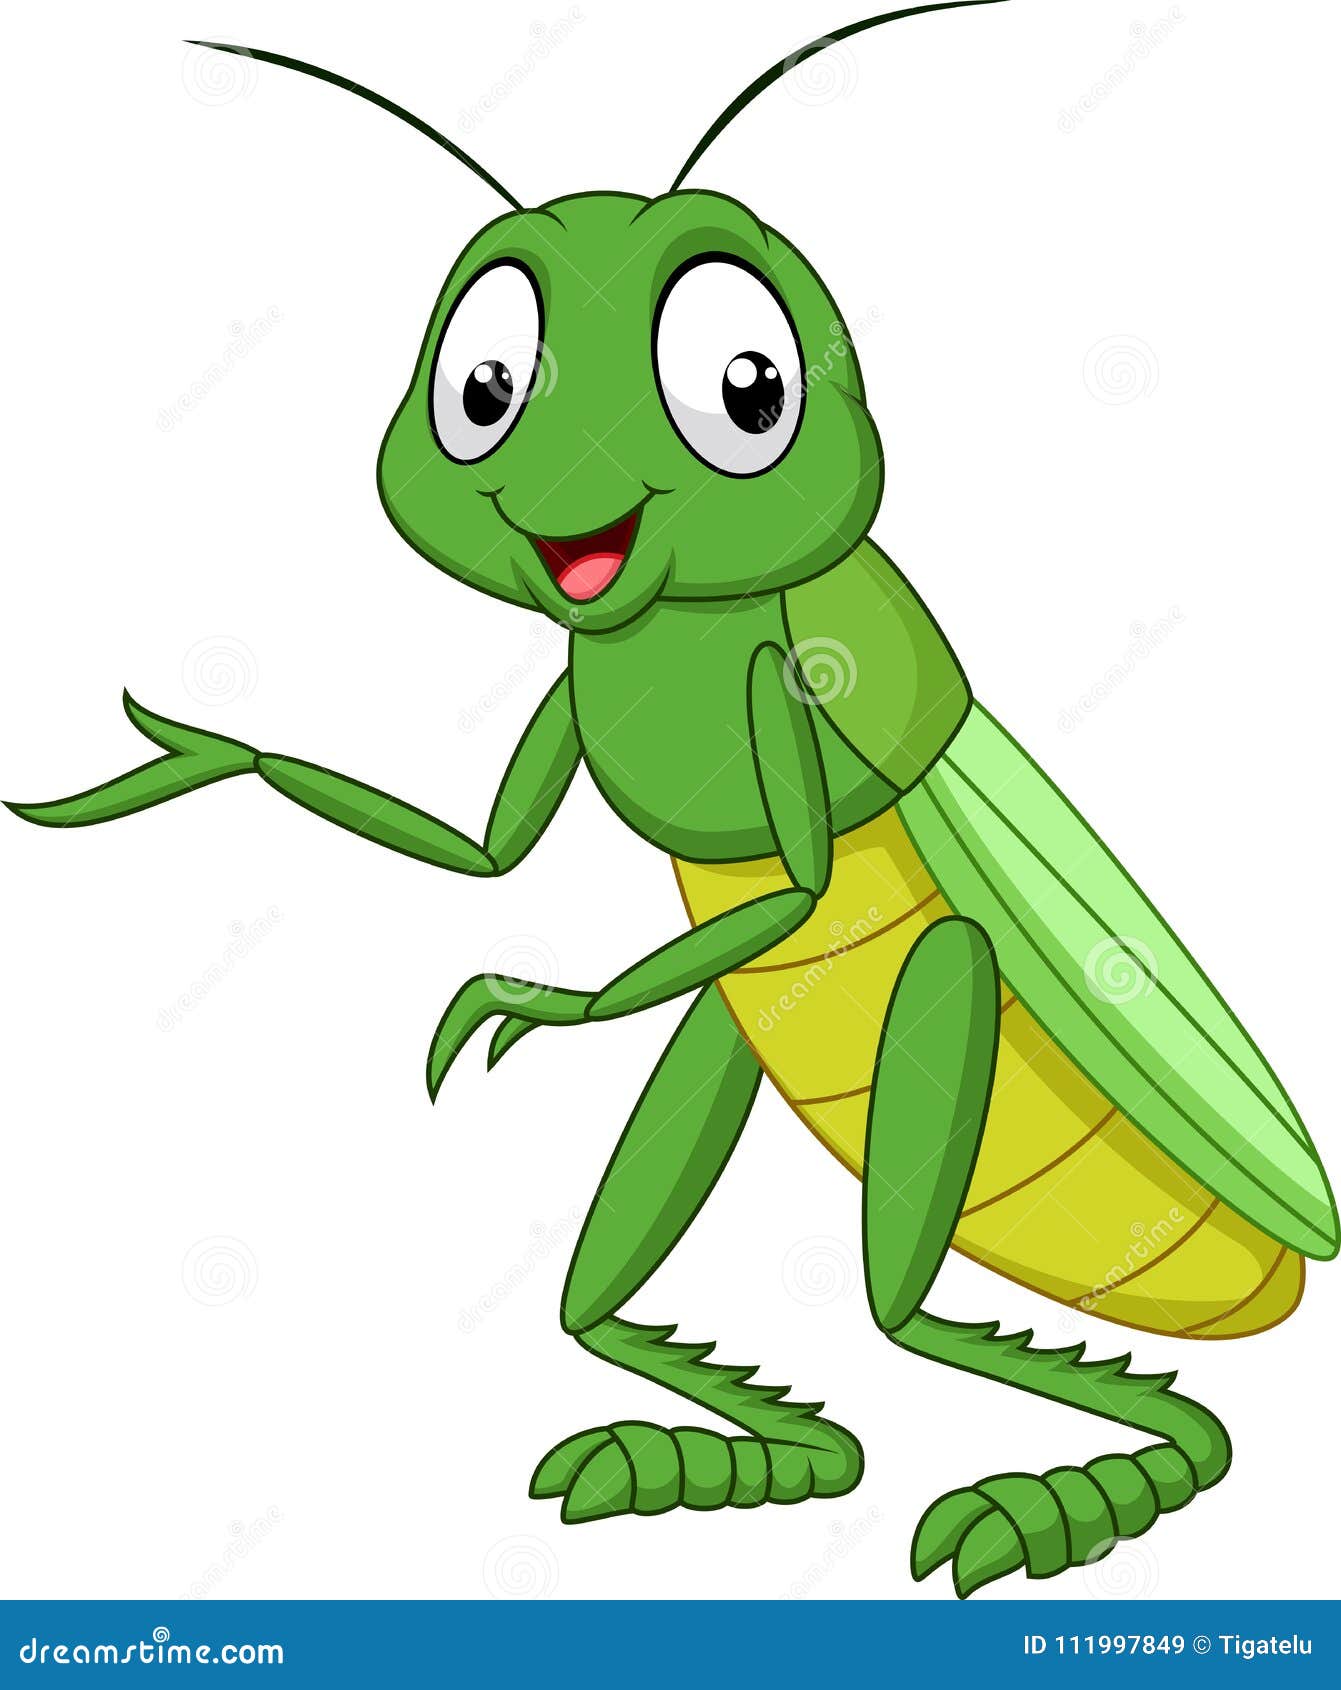 Grasshopper - Free animals icons